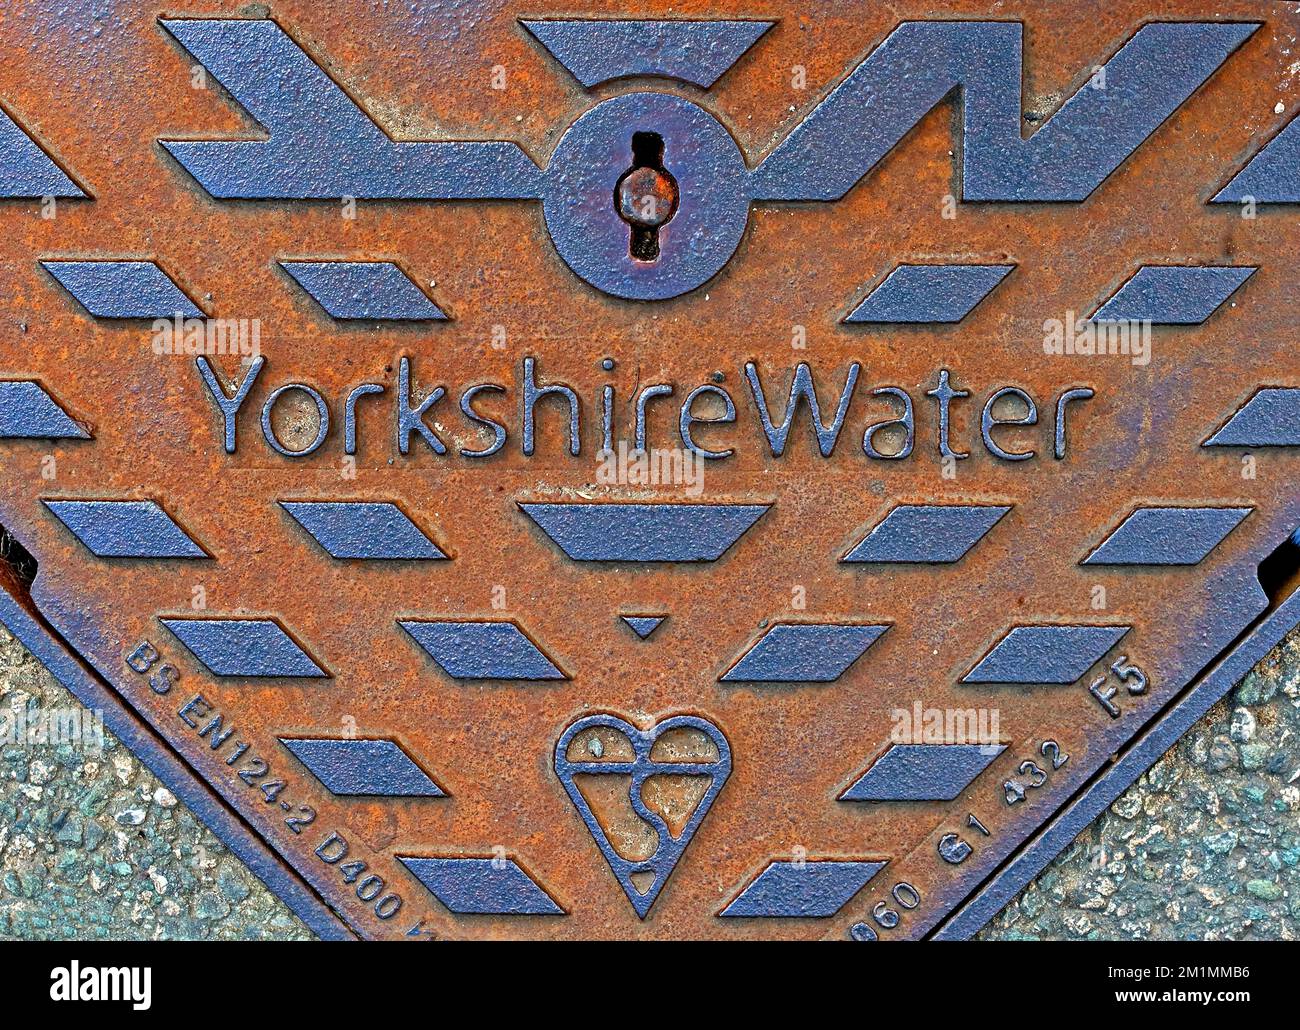 Yorkshire Water iron grid, Filey, England, UK Stock Photo